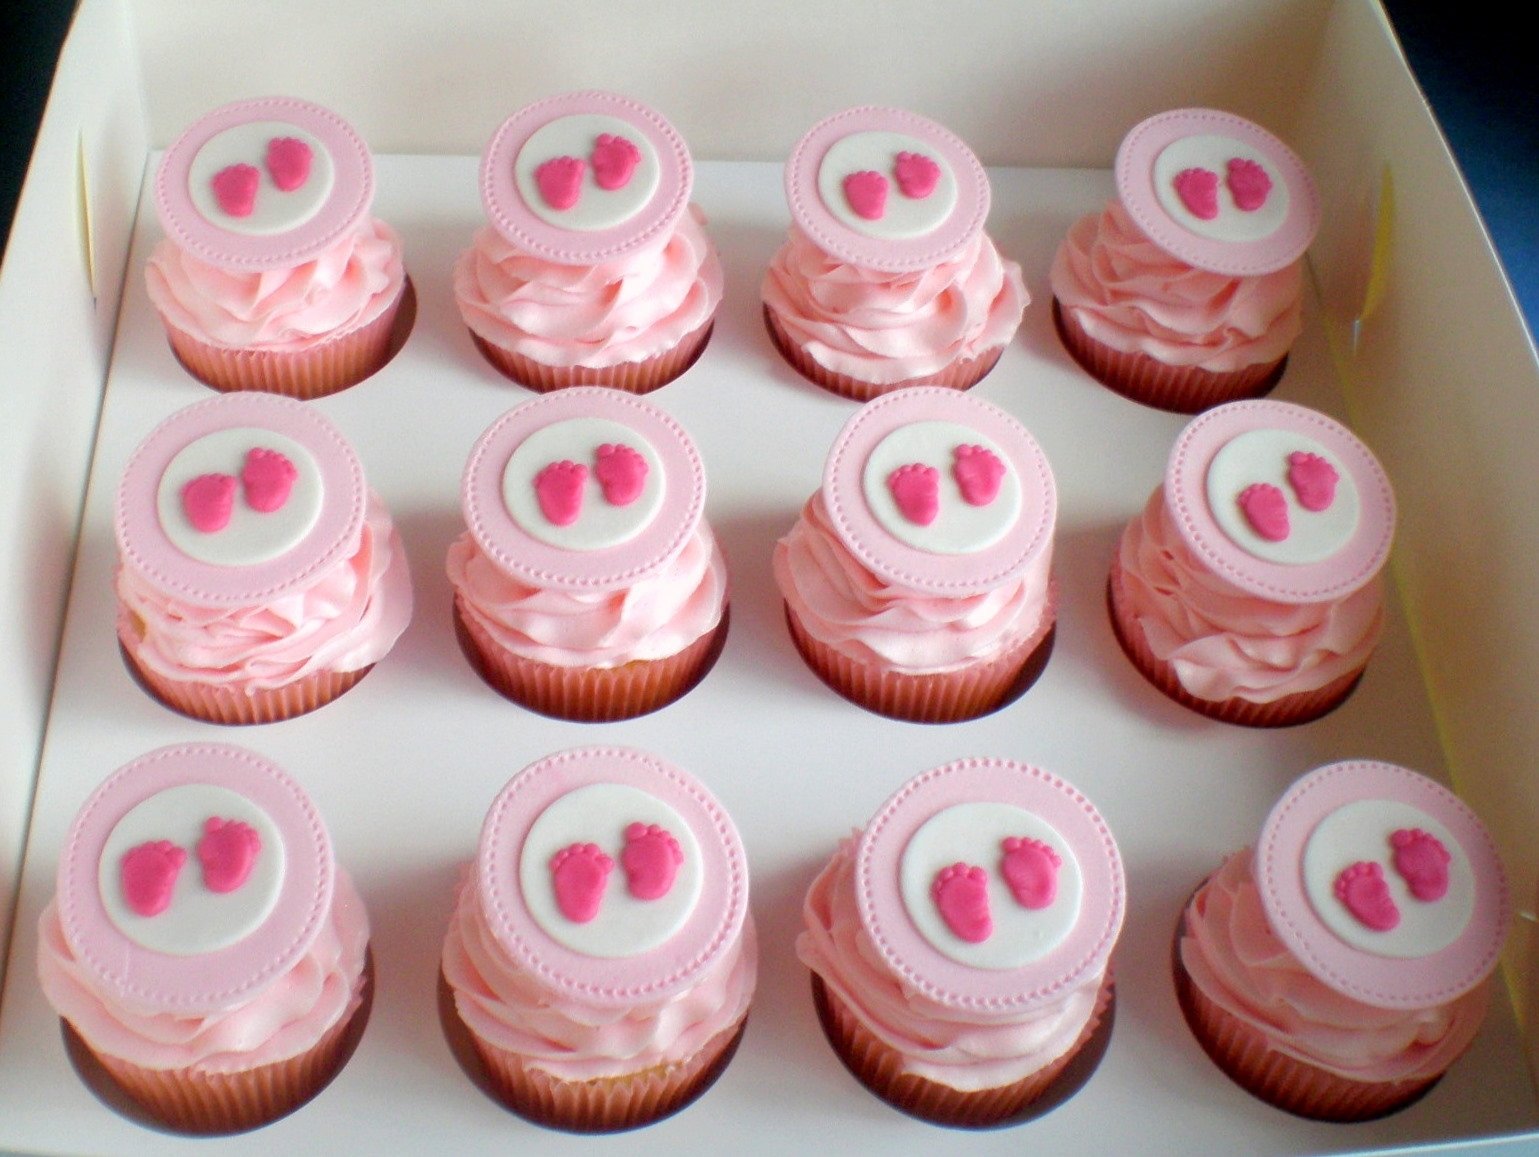 10 Perfect Girl Baby Shower Cupcake Ideas girl baby shower cupcake ideas omega center ideas for baby 1 2022